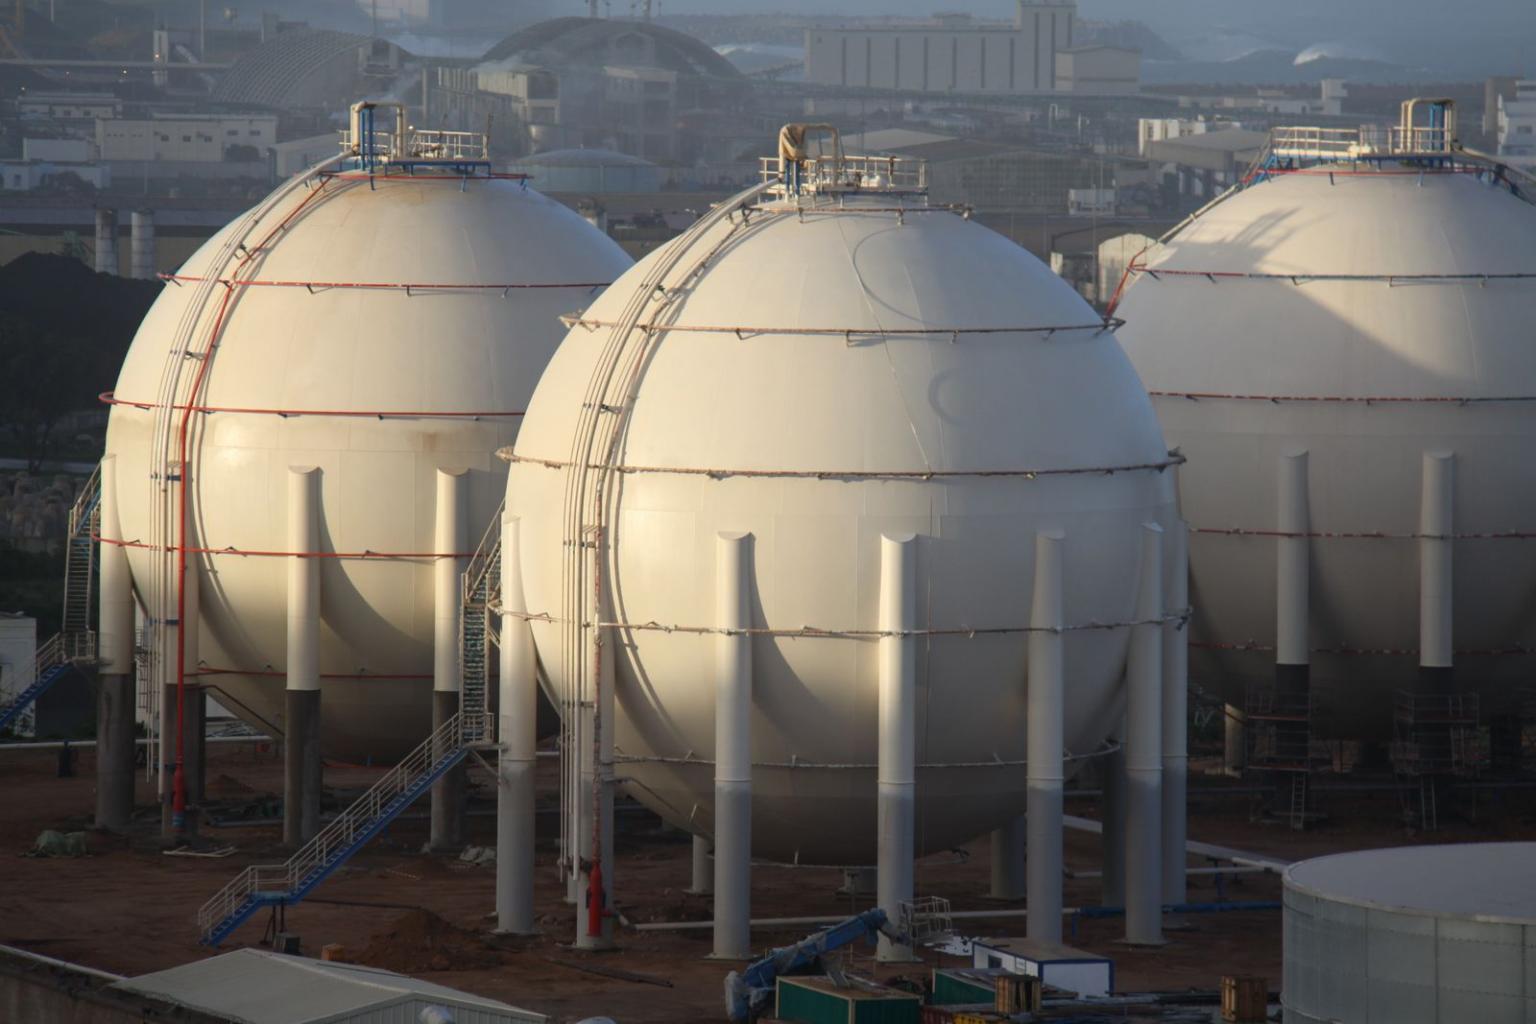 Butane gas storage tanks, Morocco (copyright Tissot)